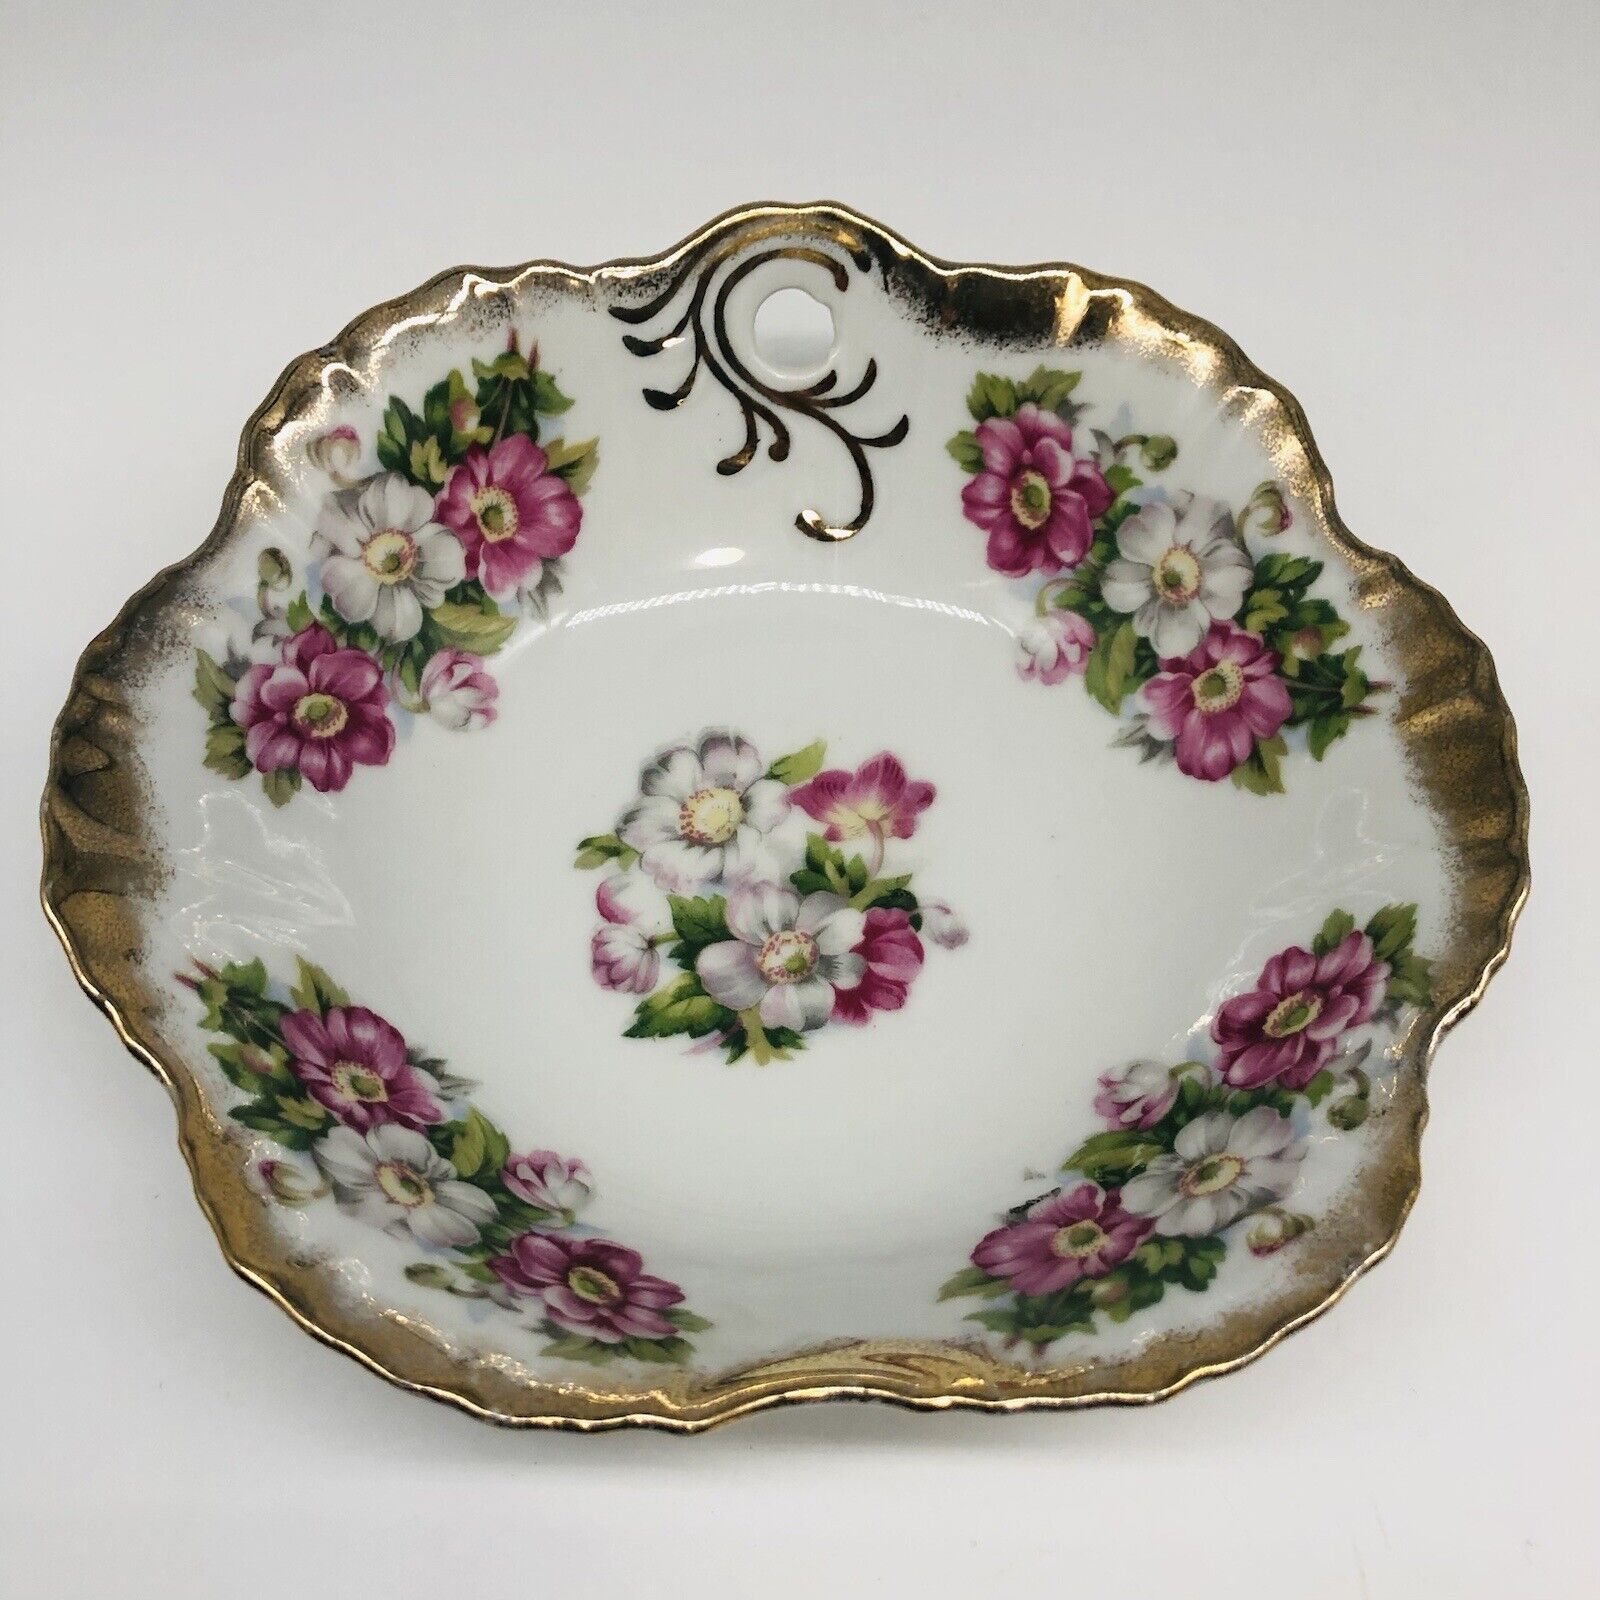 Japan Porcelain Trimont Ware Bowl Floral Victorian Pattern Trimmed in Gold.